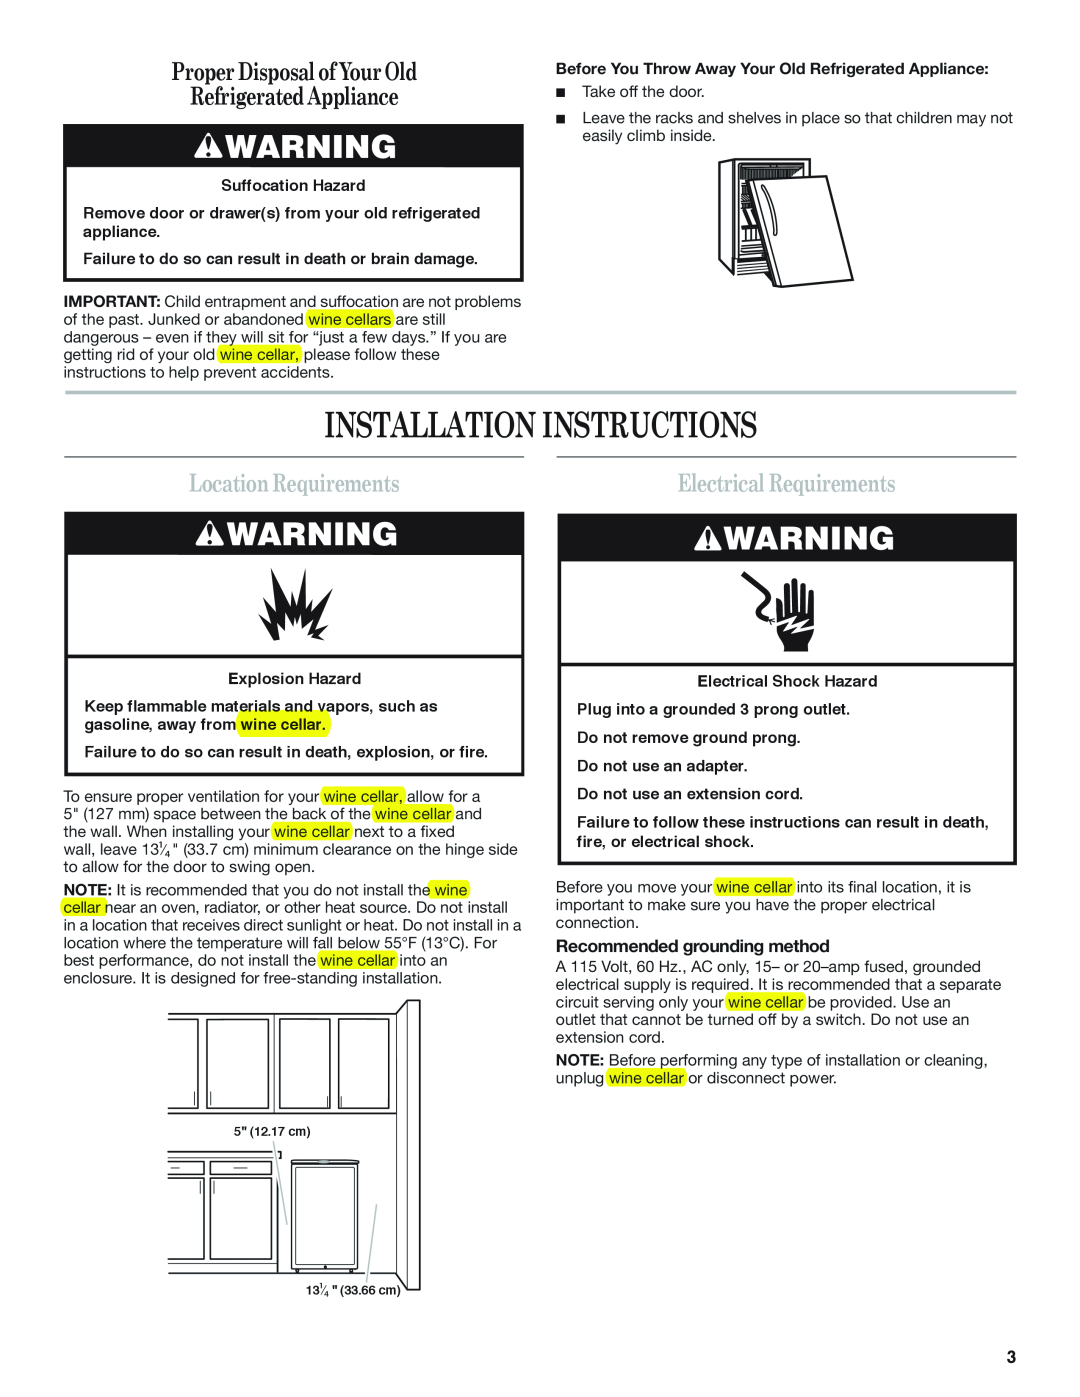 Whirlpool WWC359BLS manual Installation Instructions, ProperDisposalofYourOld RefrigeratedAppliance, LocationRequirements 